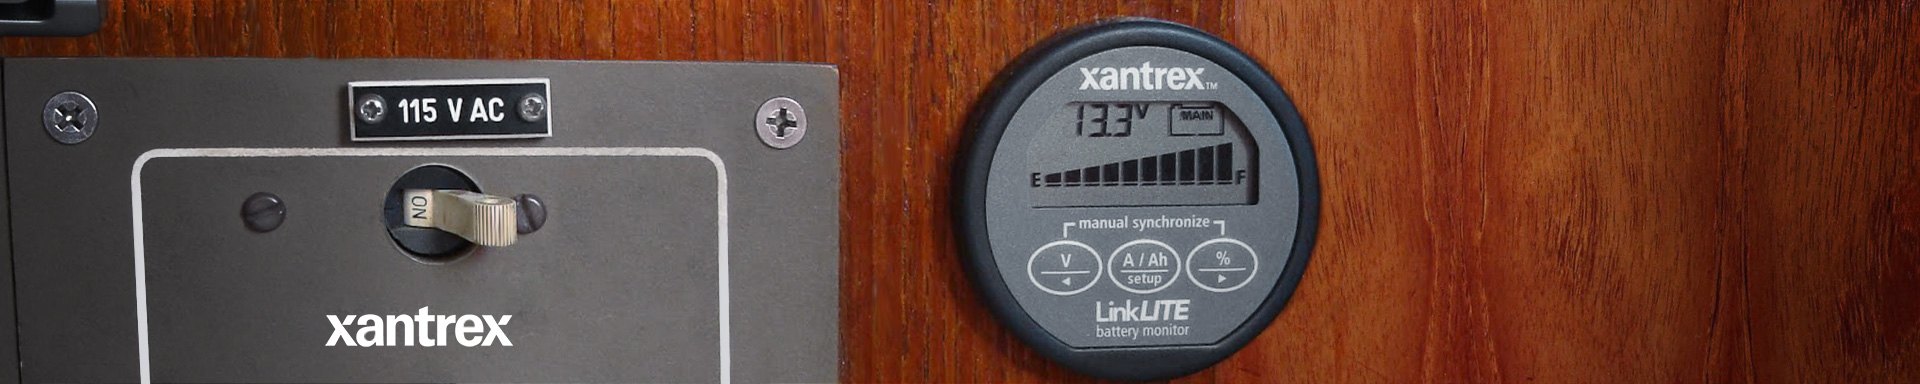 Xantrex Marine Cables